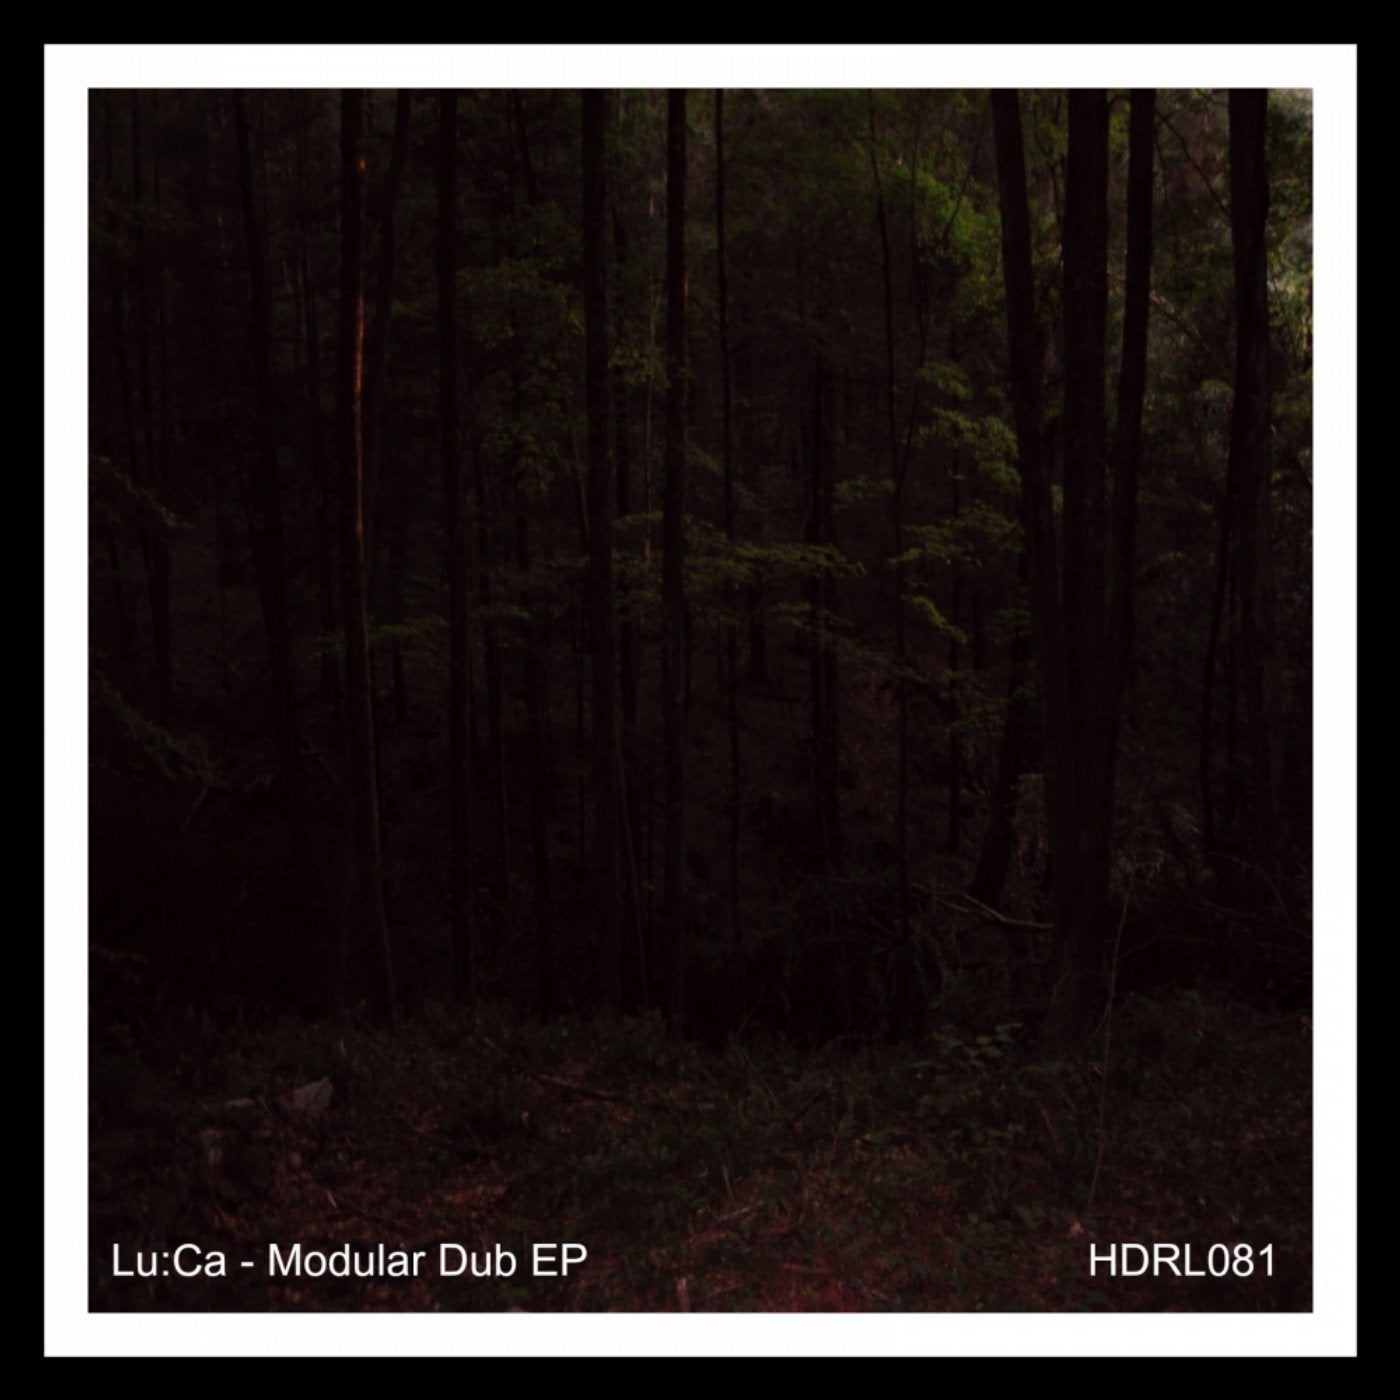 Modular Dub EP